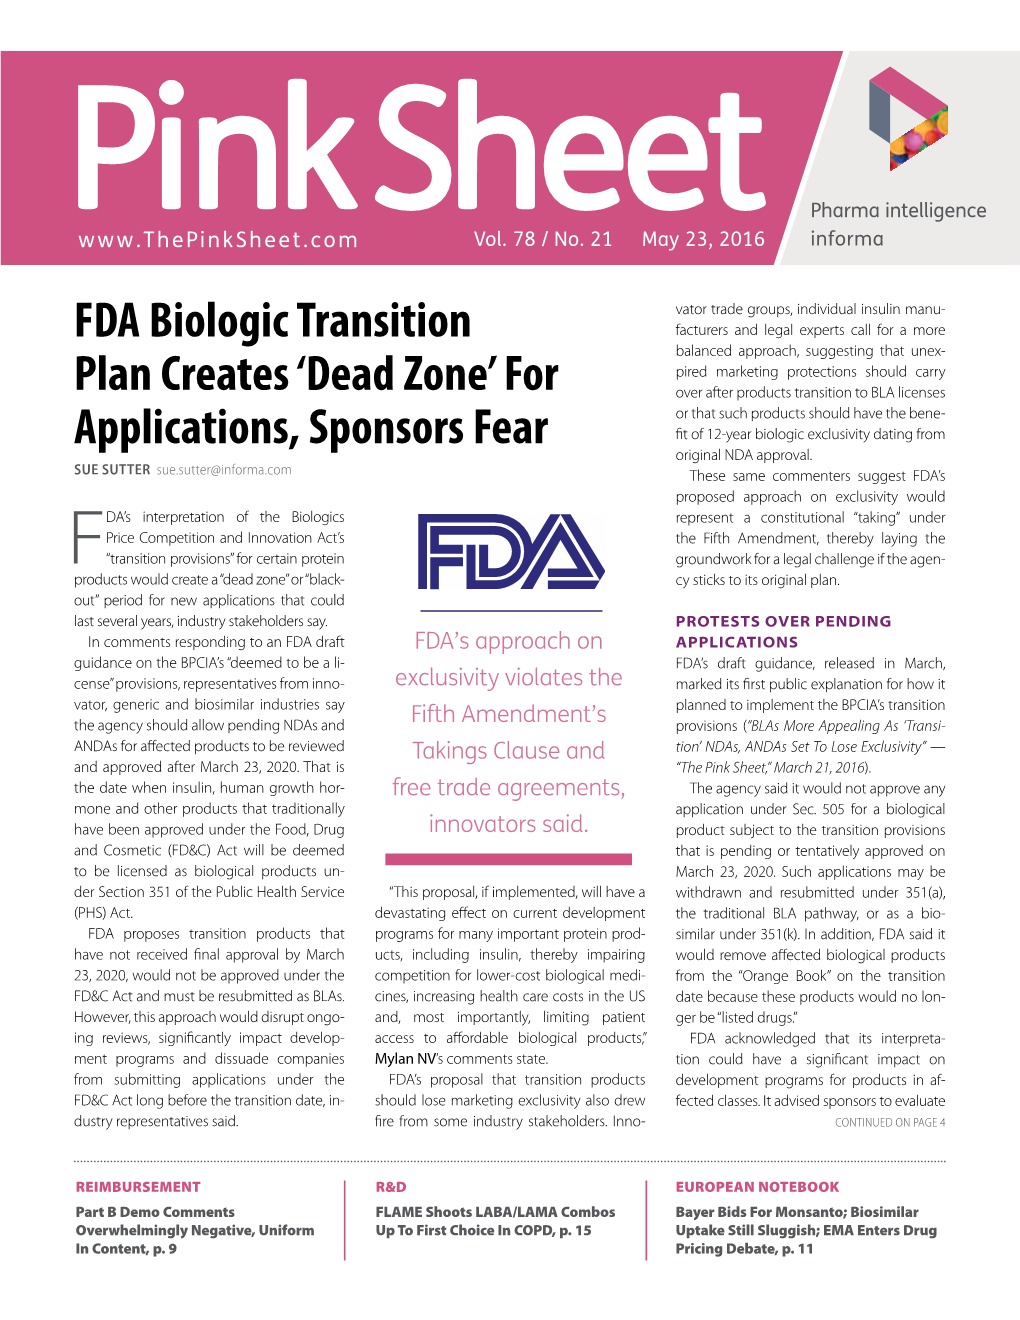 FDA Biologic Transition Plan Creates